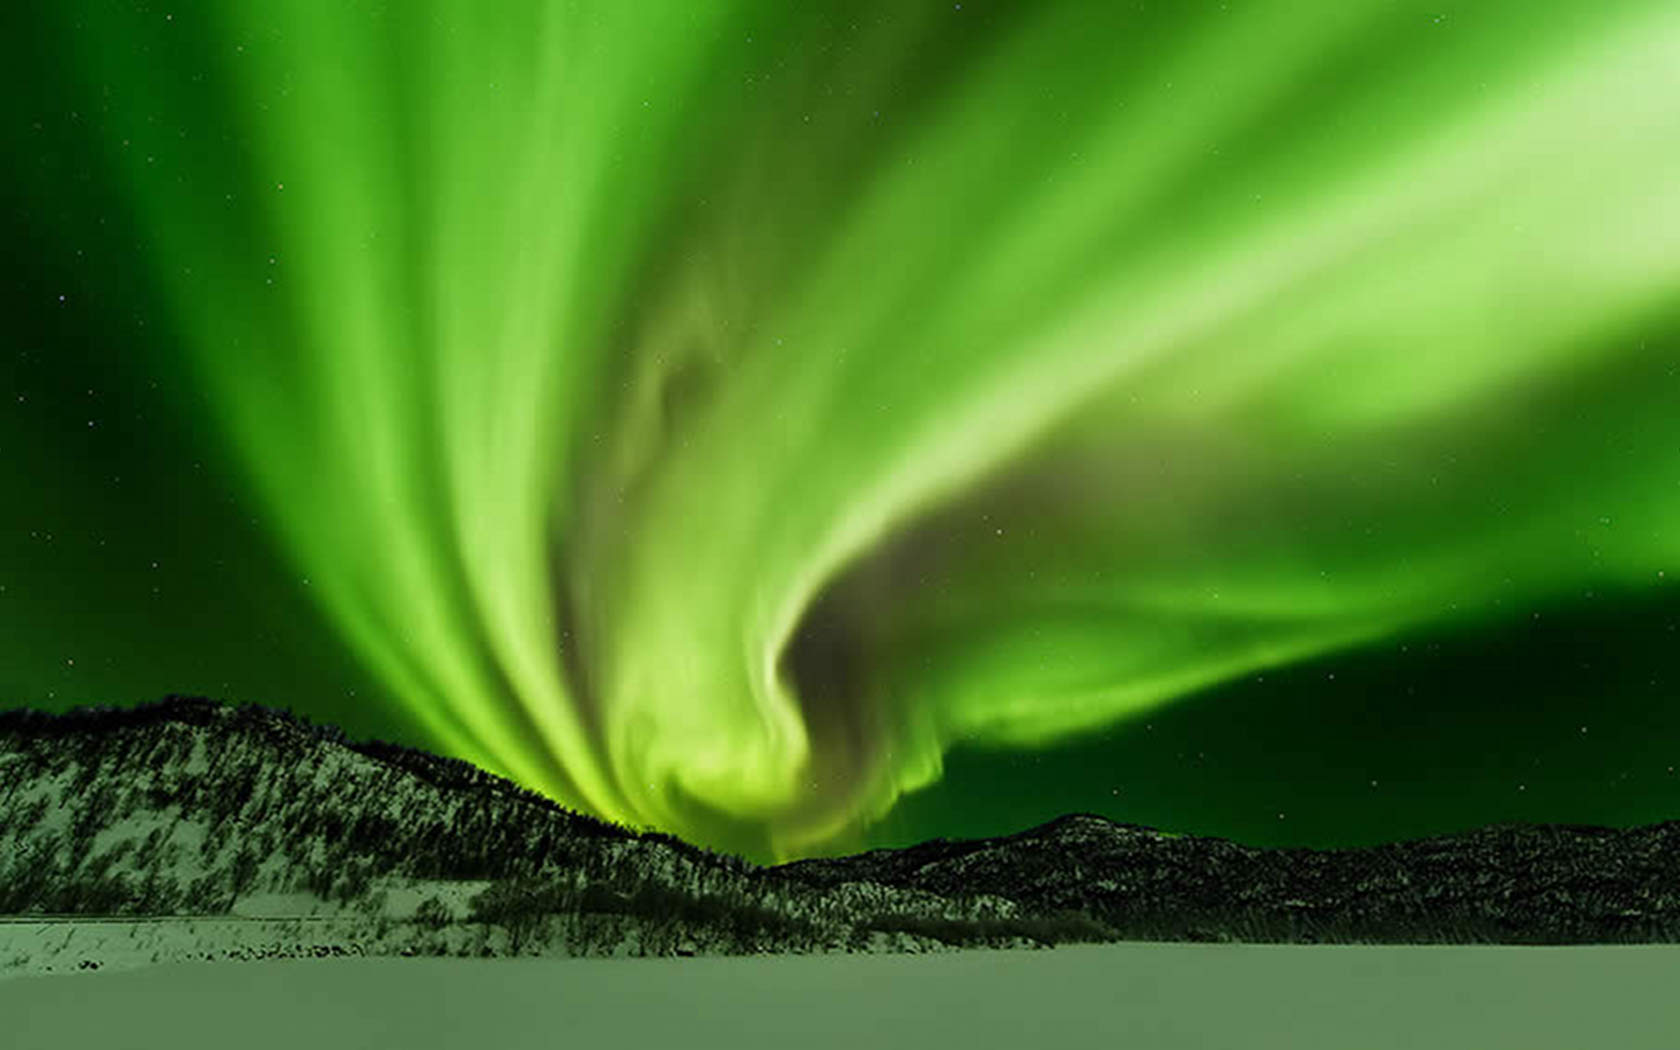 Aurora Borealis Wallpaper HD